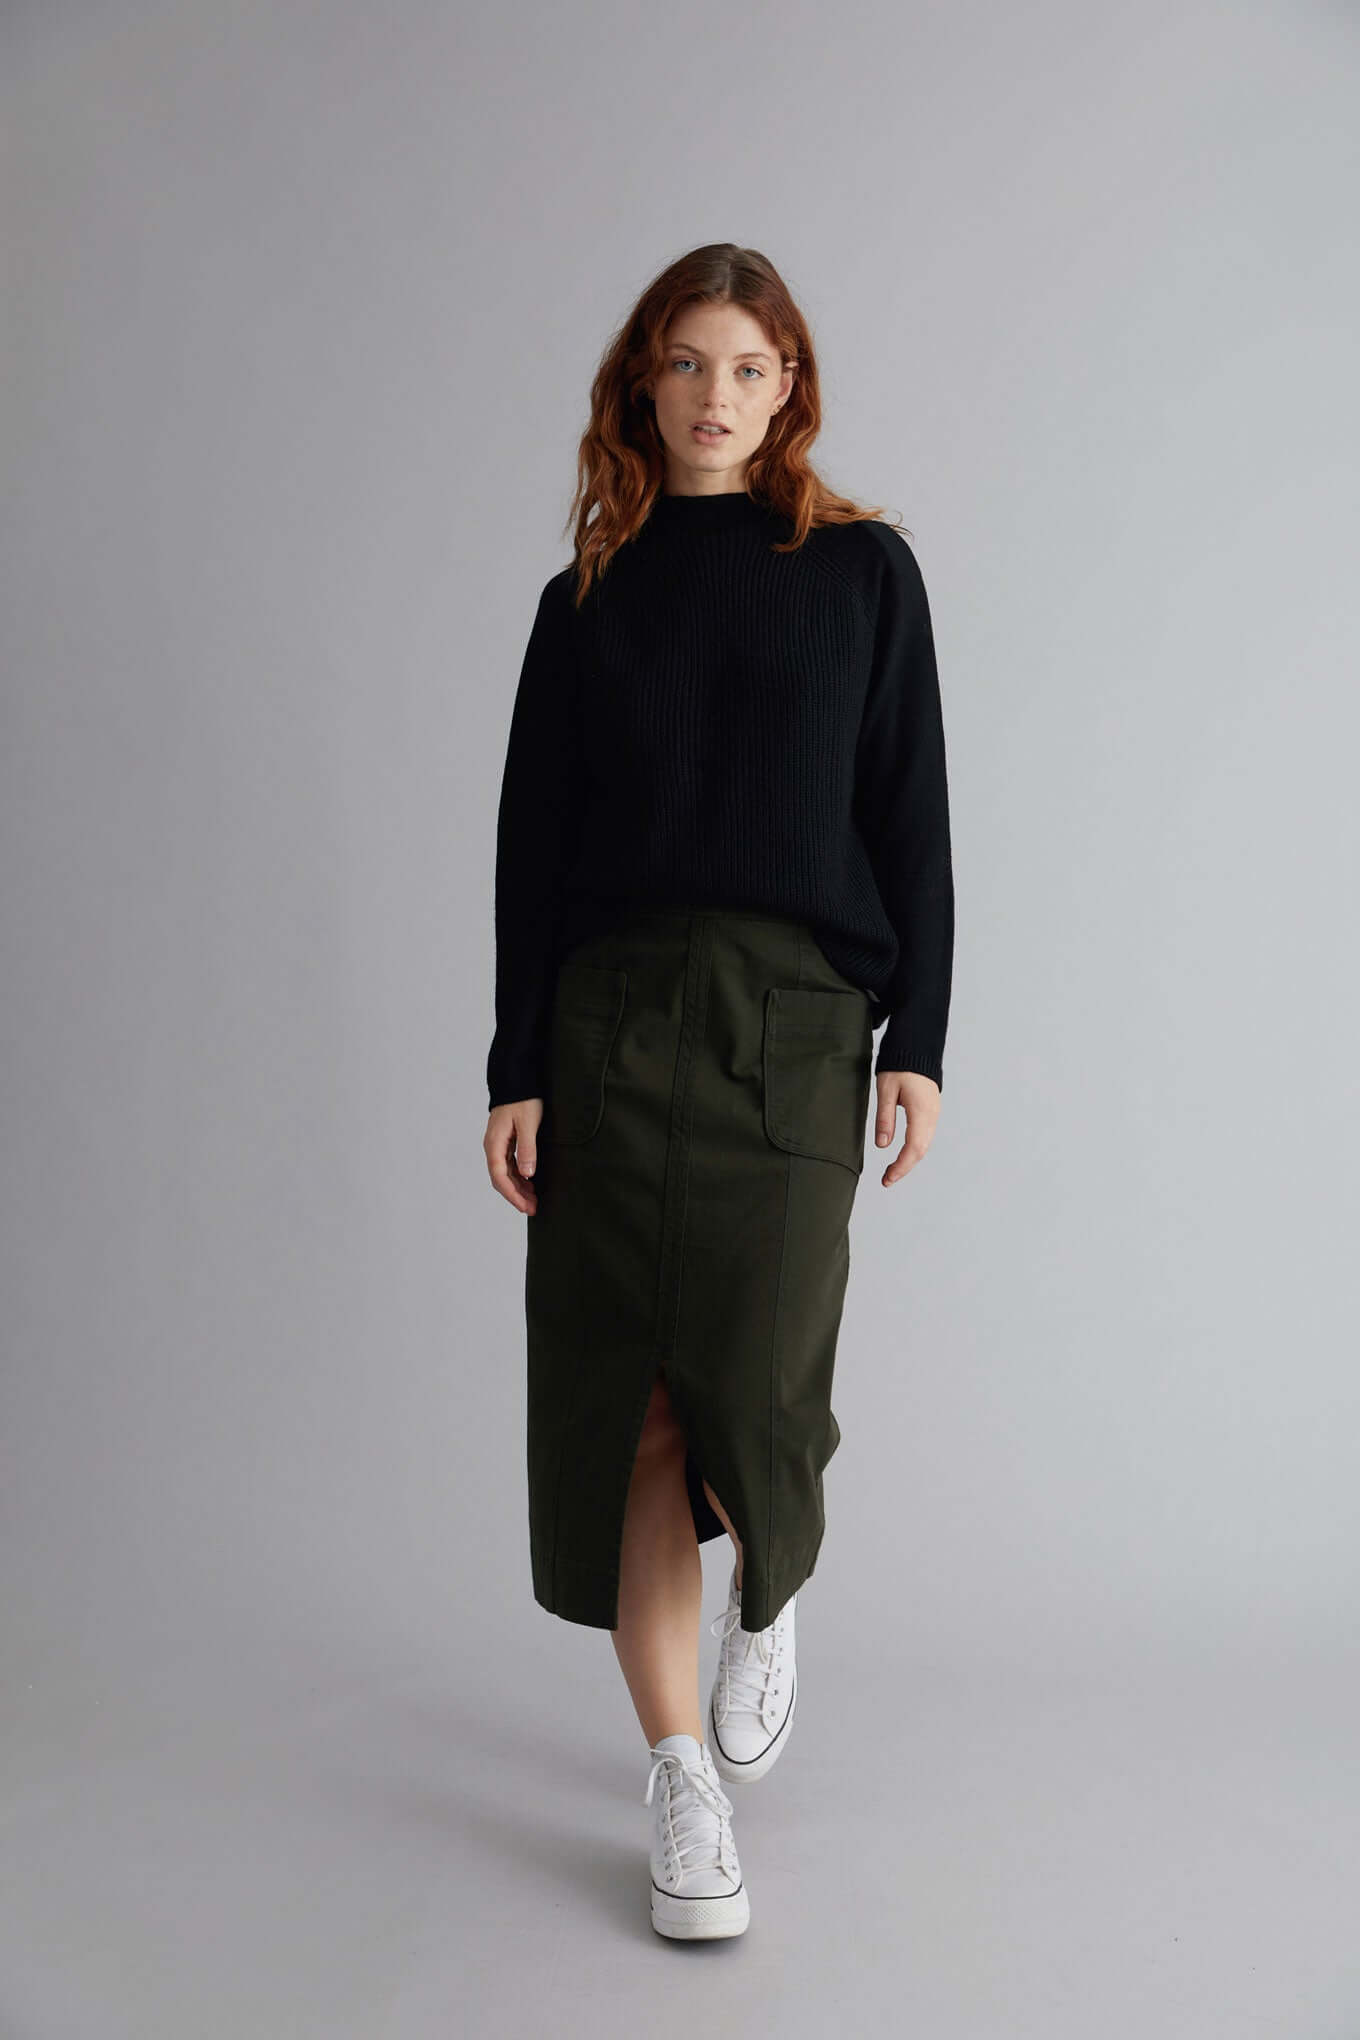 SORA Womens Organic Cotton Midi Skirt Khaki, Size 4 / UK 14 / EUR 42